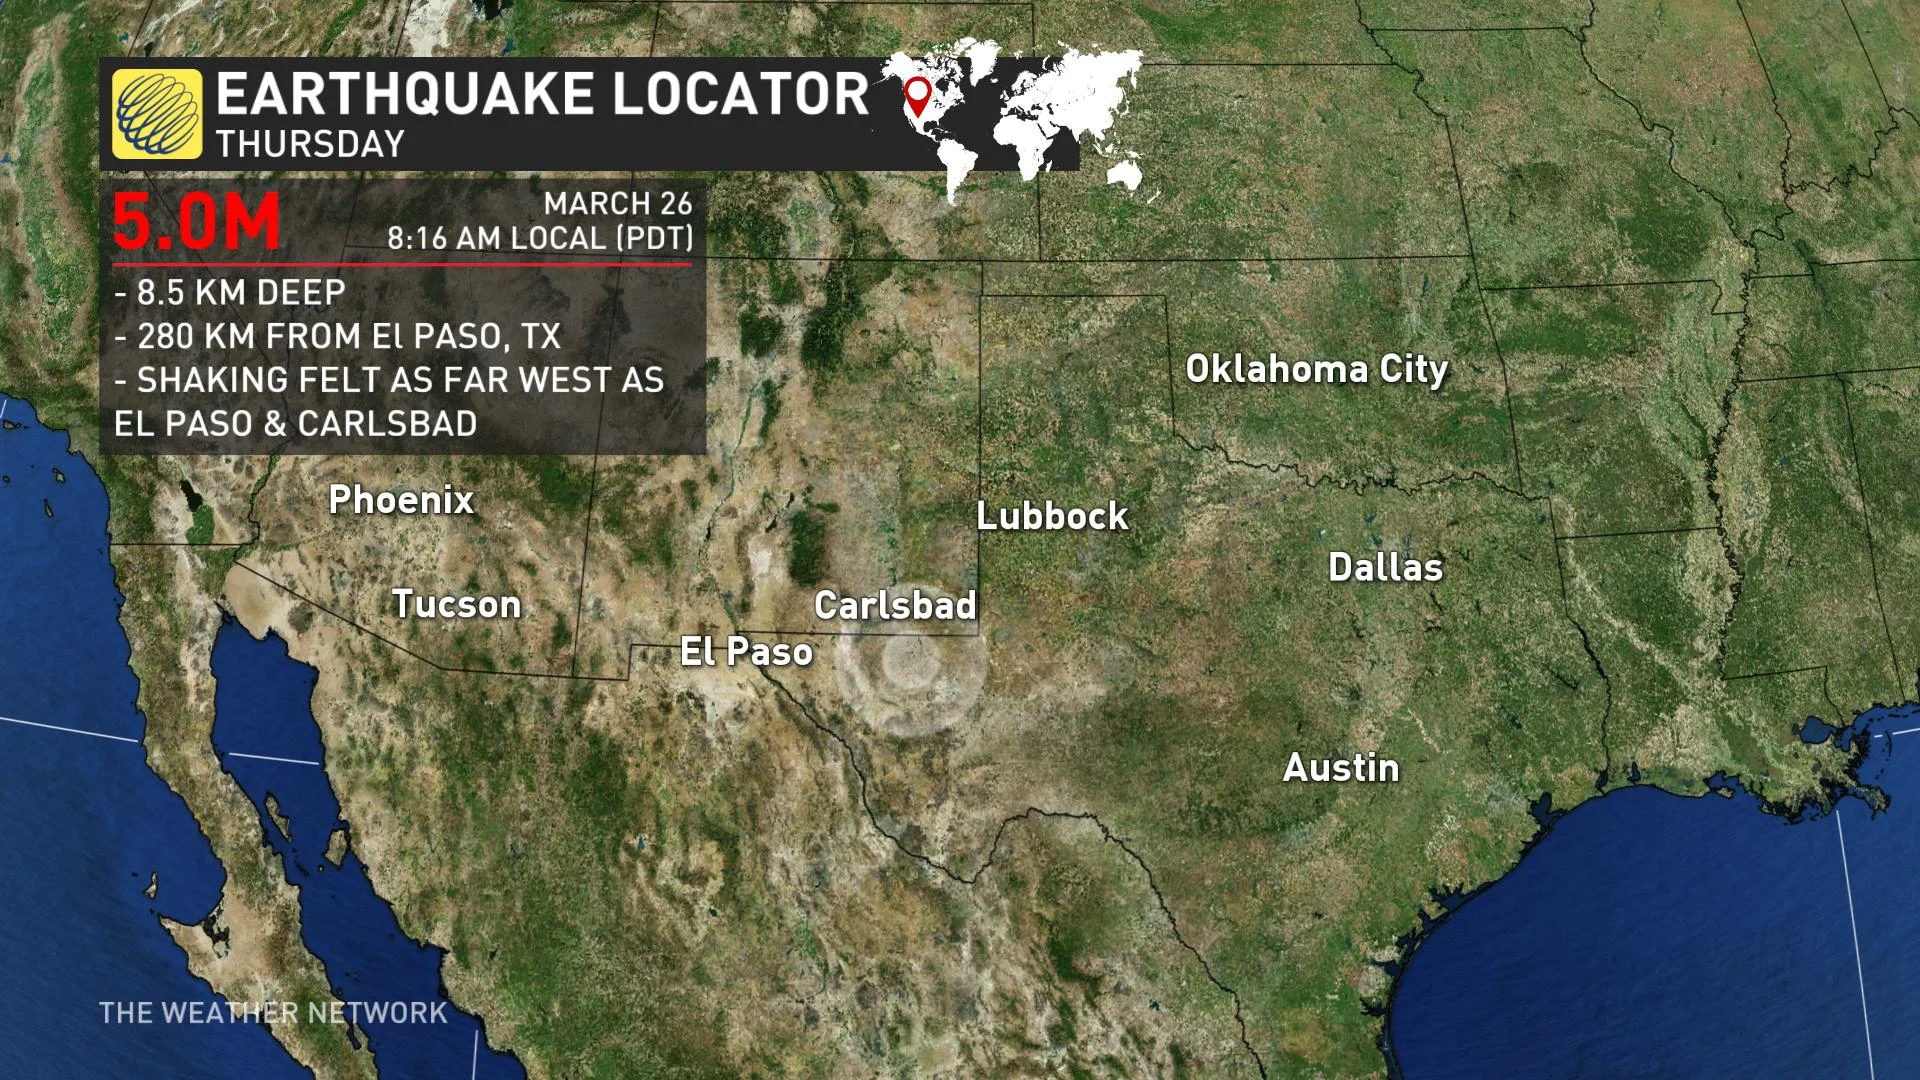 Earthquake Texas